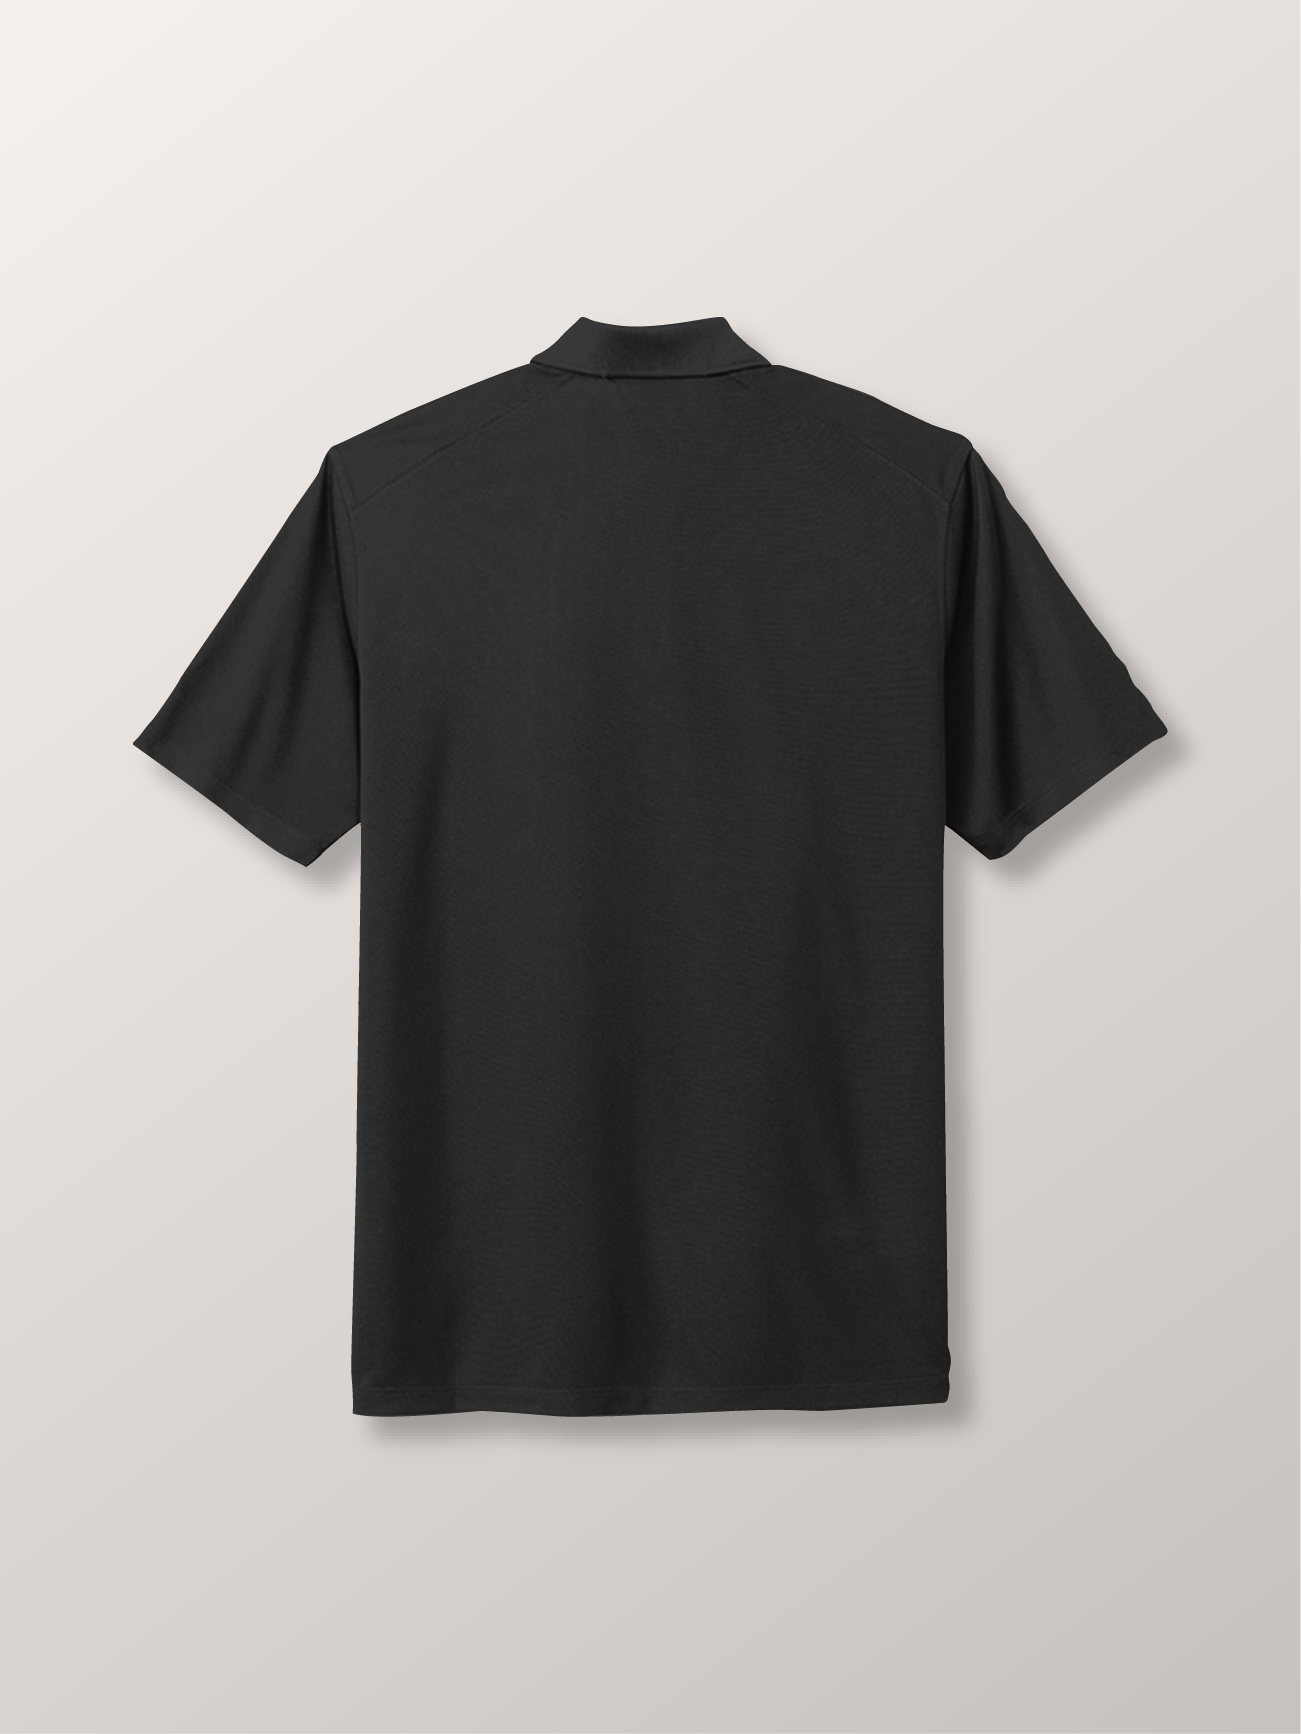 LAX World - Nike Dri-fit Micro-pique Black Lacrosse Polo Shirt - Back 